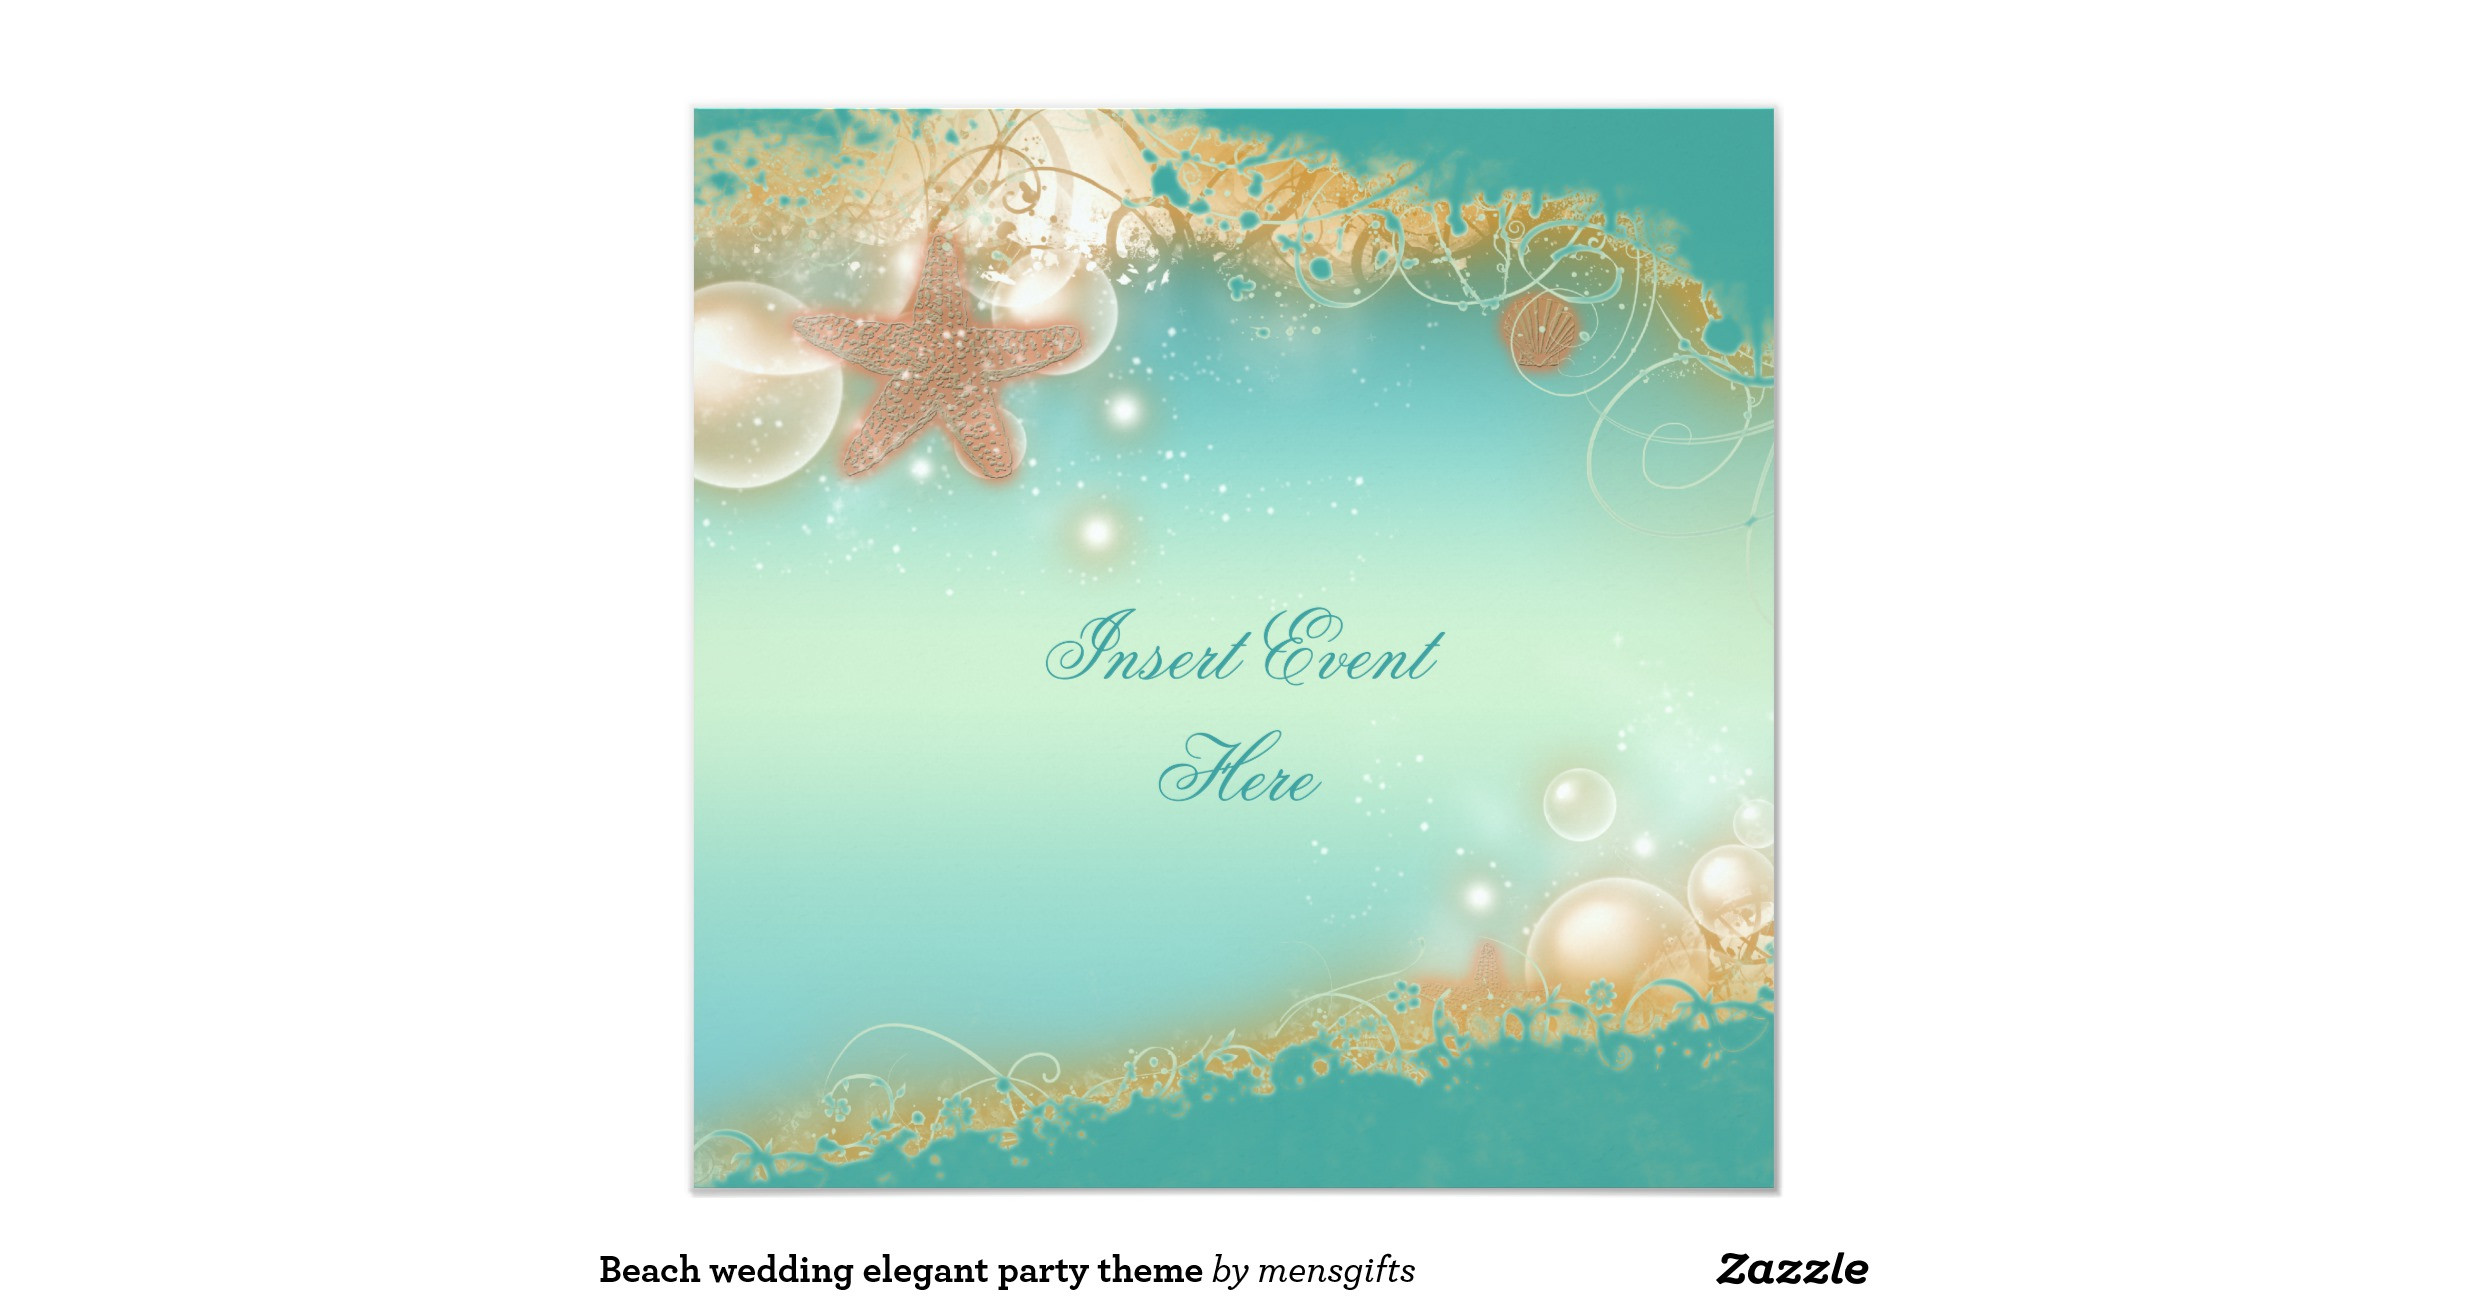 Elegant Beach Party Ideas
 beach wedding elegant party theme invitation